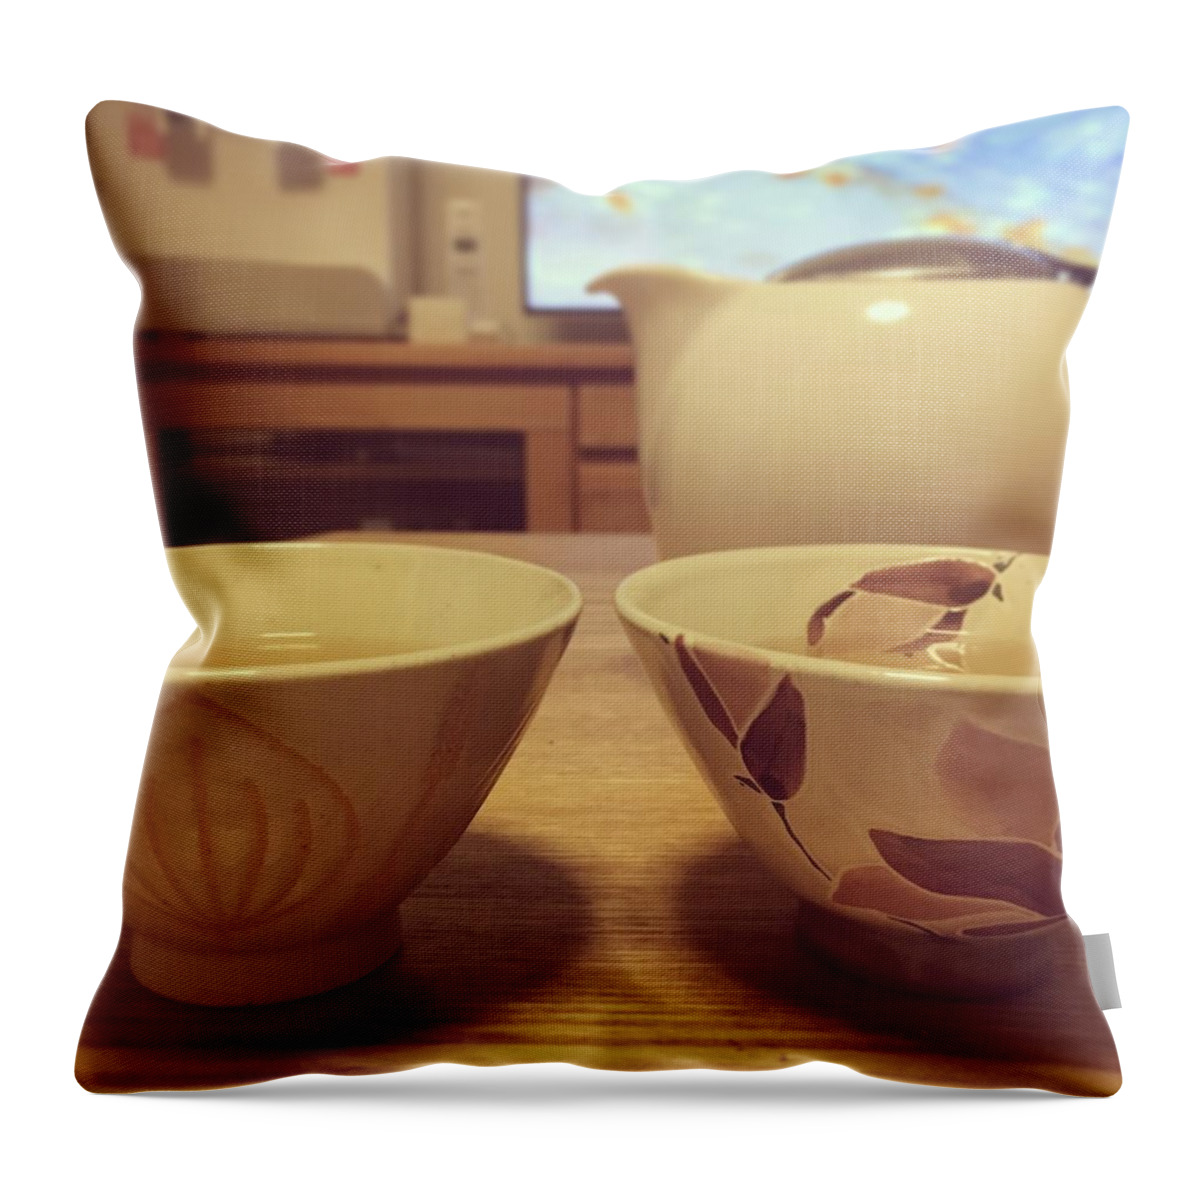 Japan Throw Pillow featuring the photograph Tea Time by Kasumi Taniyama